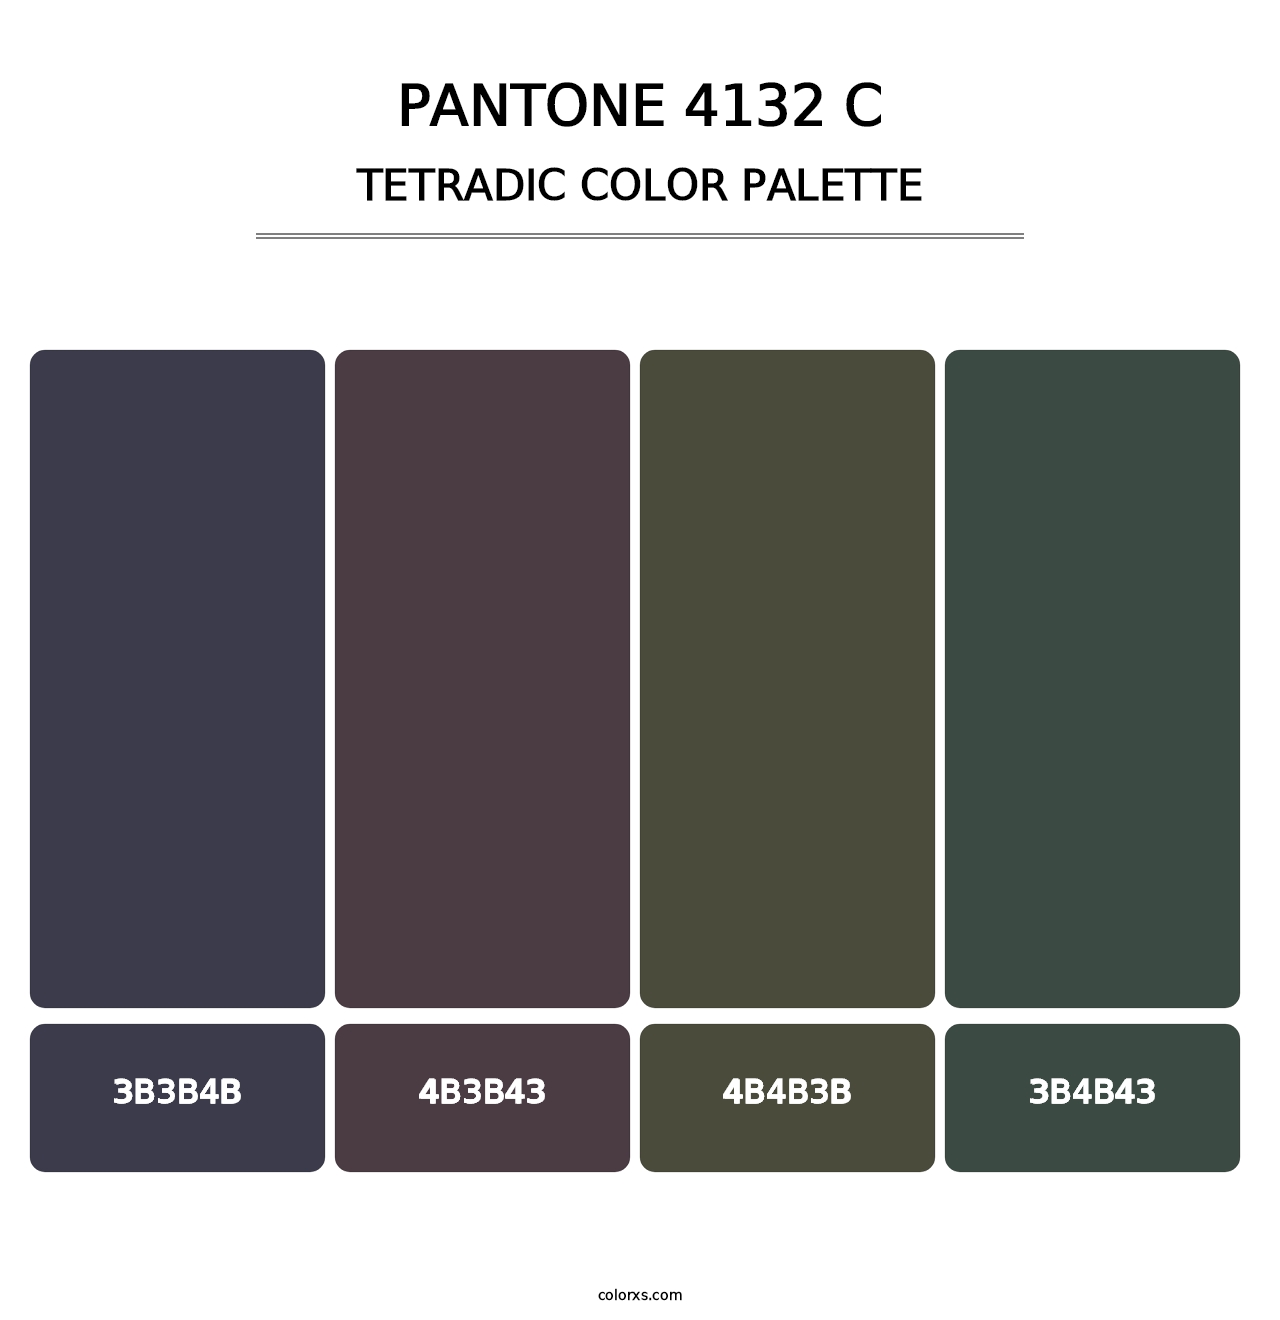 PANTONE 4132 C - Tetradic Color Palette